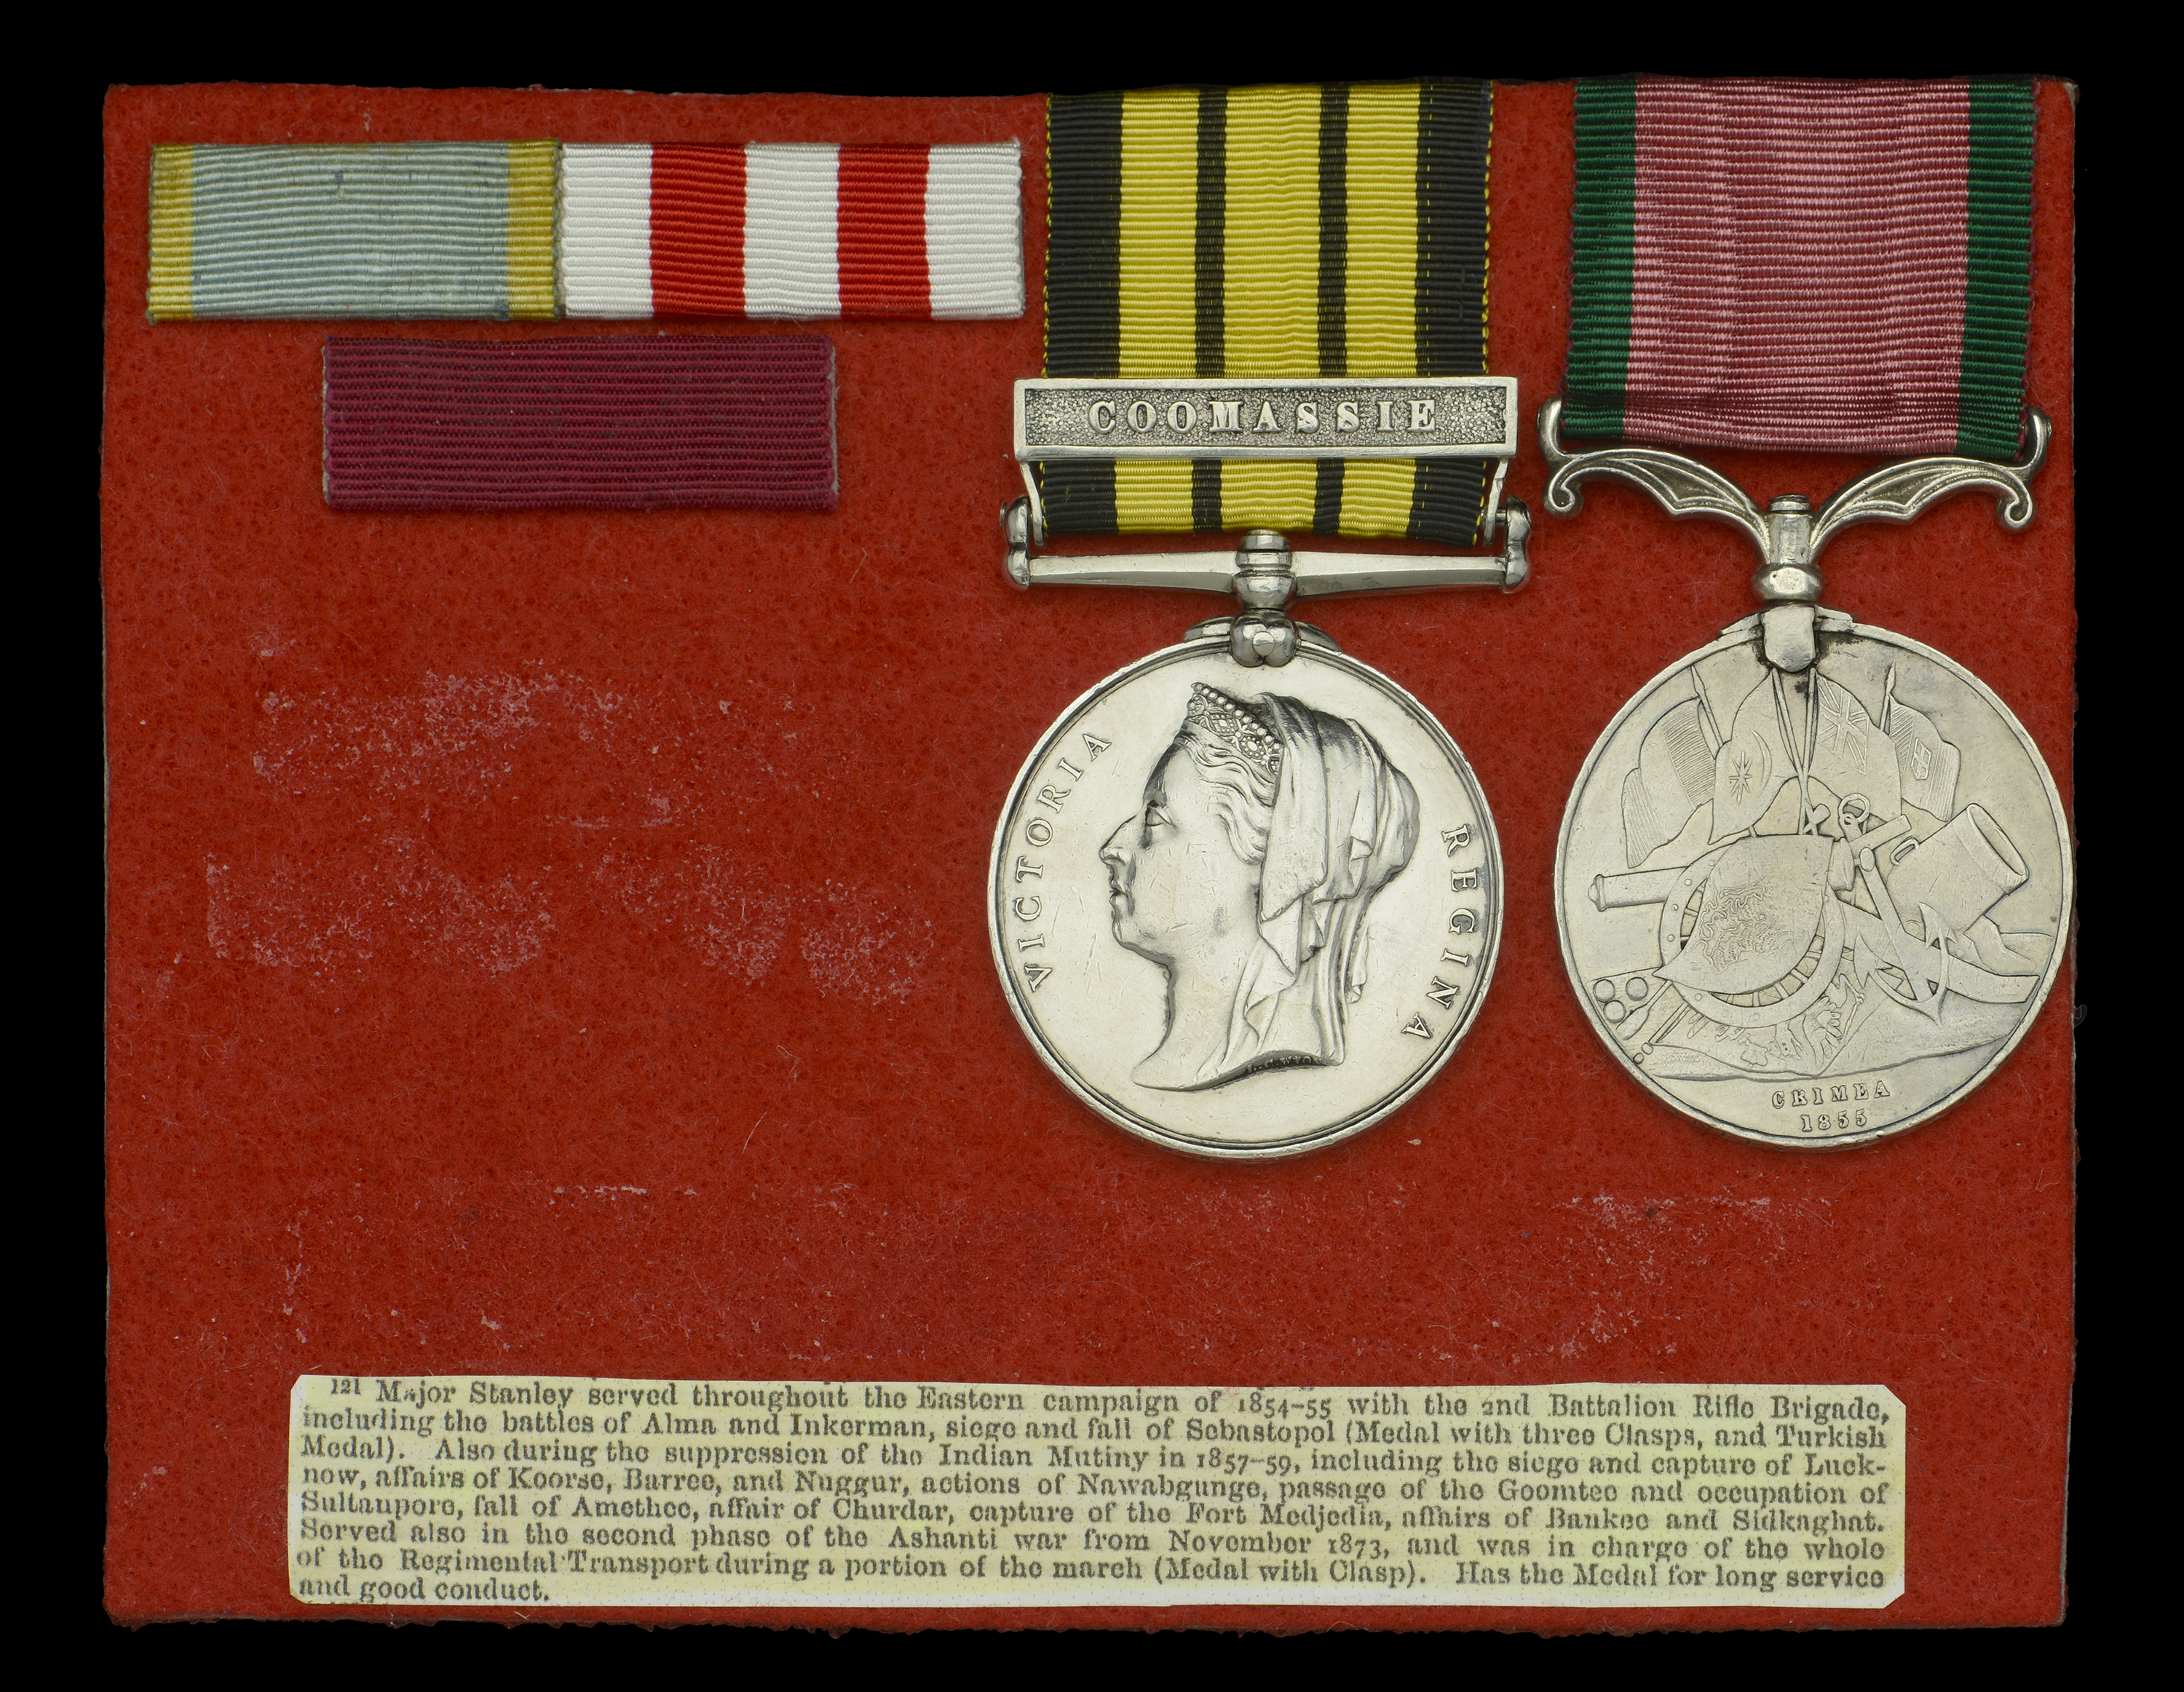 Pair: Major W. J. Stanley, Rifle Brigade Ashantee 1873-74, 1 clasp, Coomassie (Qr. Mr. W....